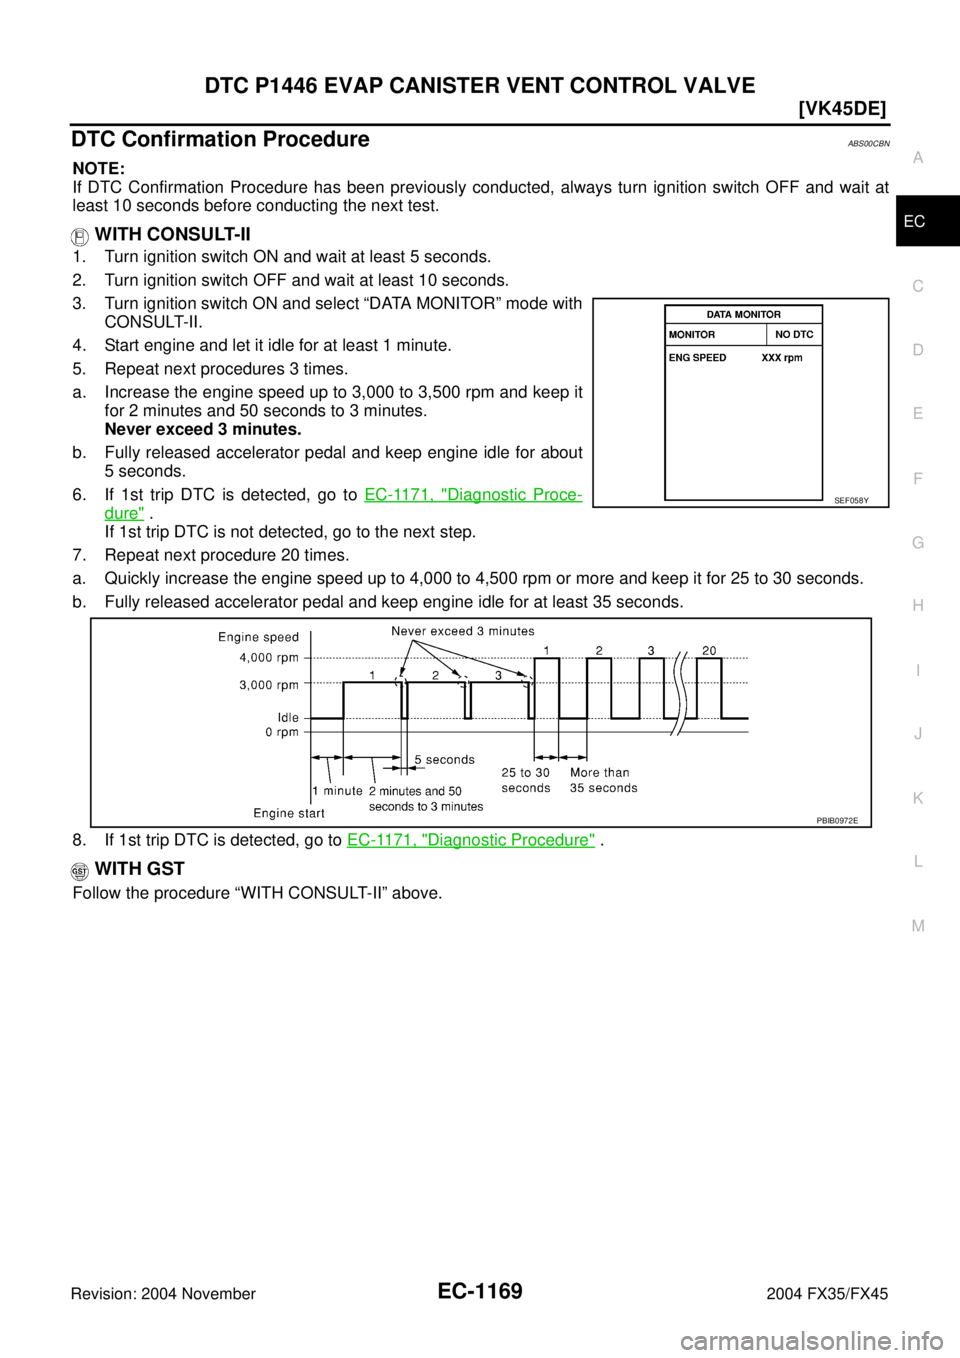 INFINITI FX35 2004  Service Manual DTC P1446 EVAP CANISTER VENT CONTROL VALVE
EC-1169
[VK45DE]
C
D
E
F
G
H
I
J
K
L
MA
EC
Revision: 2004 November 2004 FX35/FX45
DTC Confirmation ProcedureABS00CBN
NOTE:
If DTC Confirmation Procedure has 